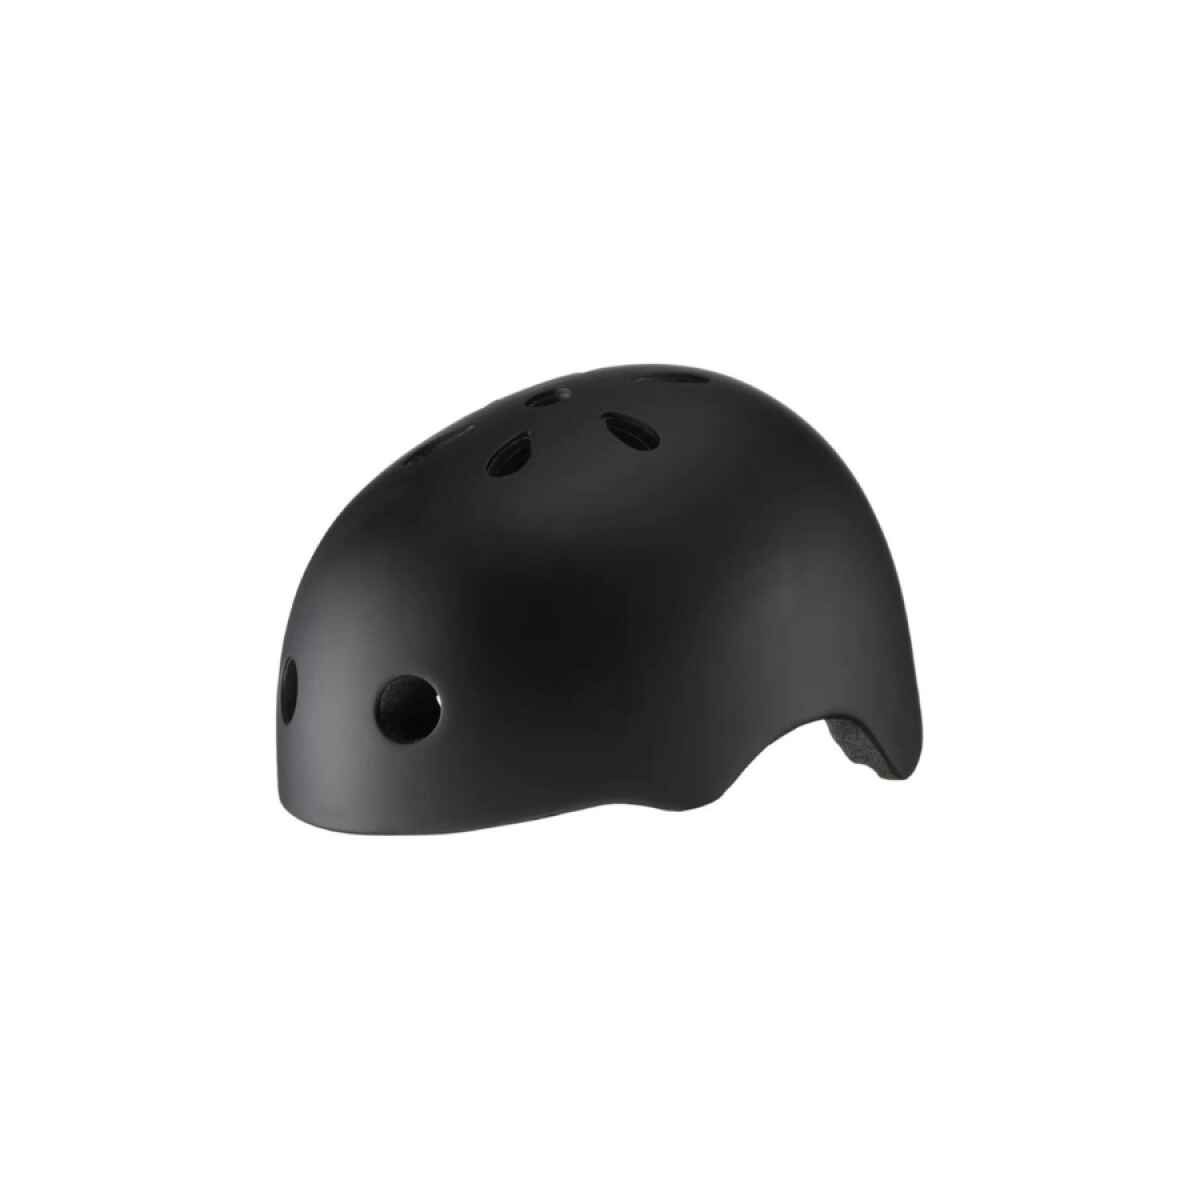 Helmet in black matte